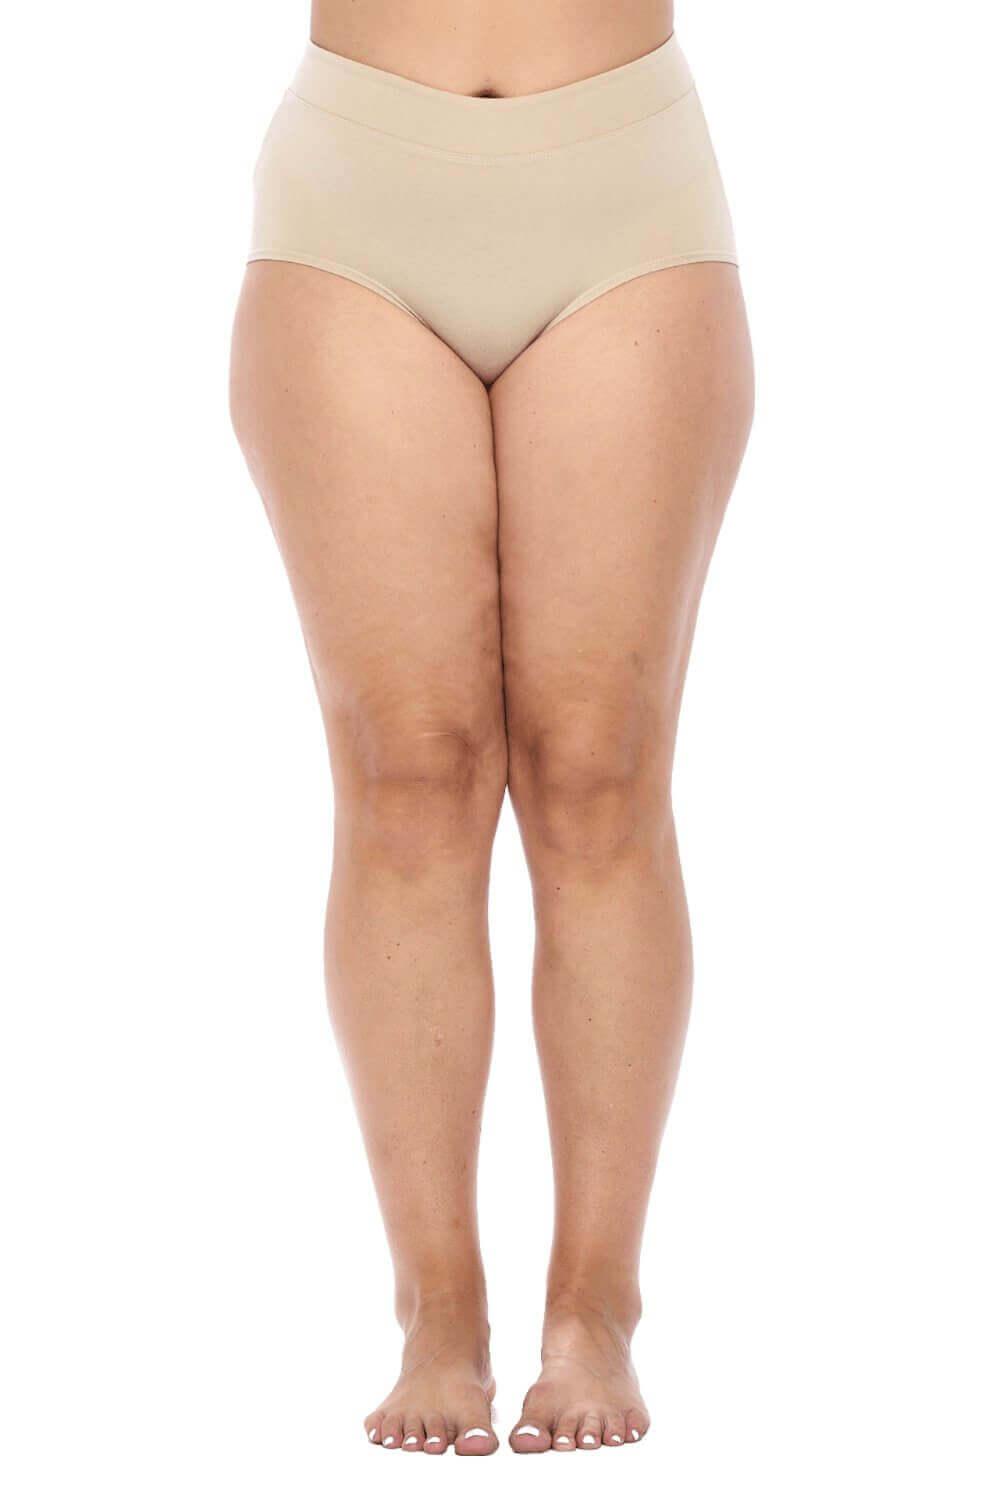 Moisture Wicking Underwear for Women - Long Leg 6.5 Boyshort Briefs Small  to Plus Size